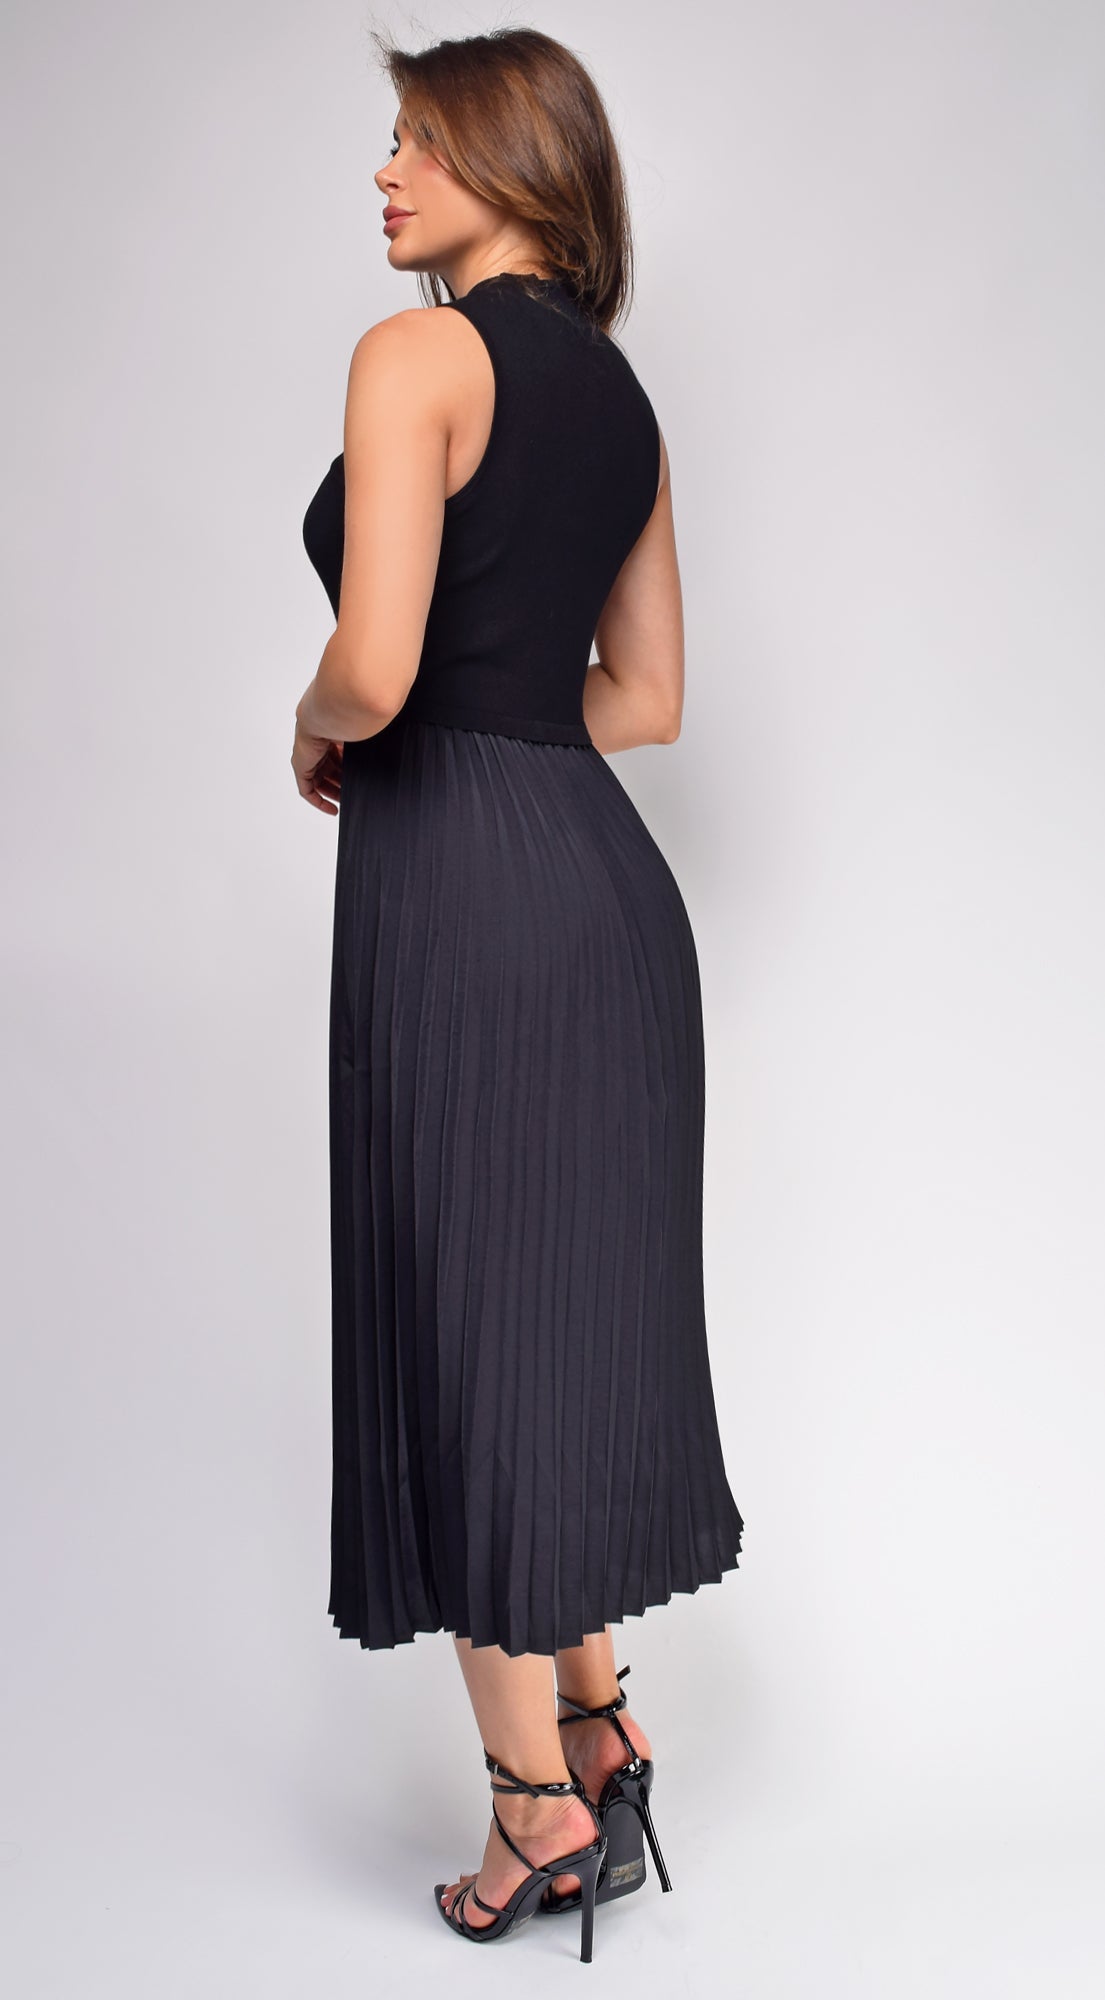 Ashlen Black Pleated Contrast High Neck Midi Dress